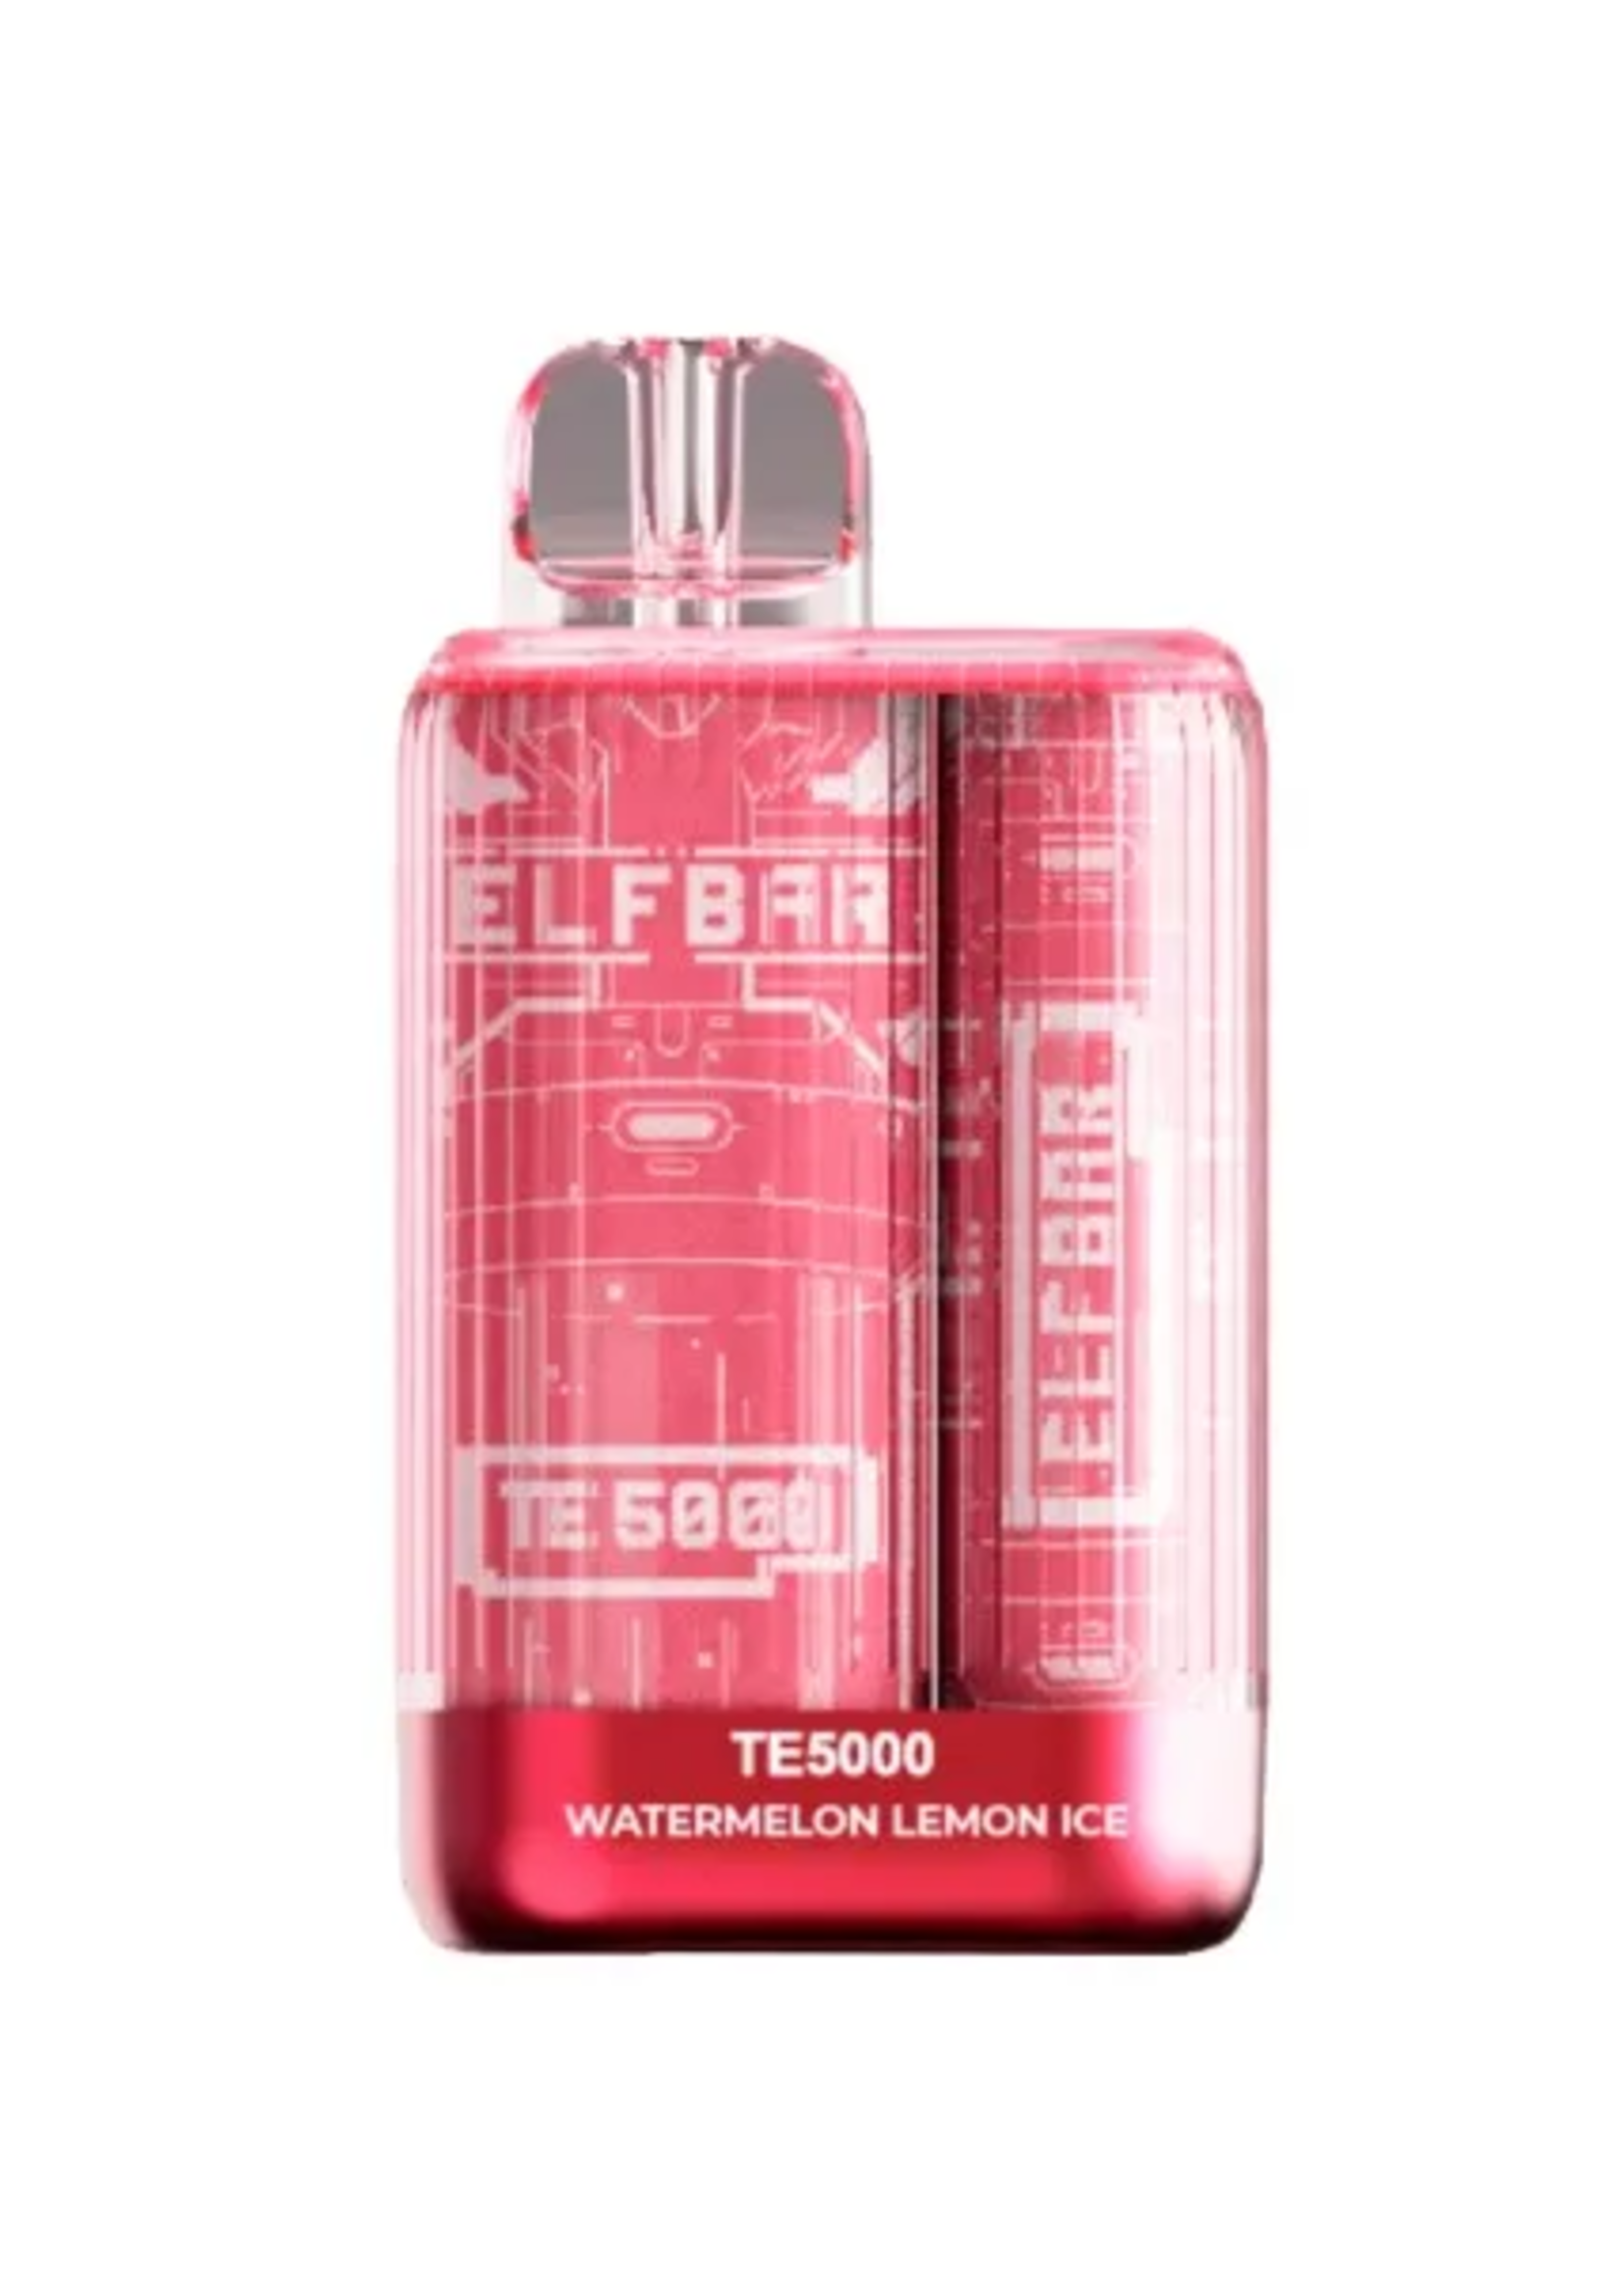 ELFBAR ELFBAR TE-5000 WATERMELON LEMON ICE